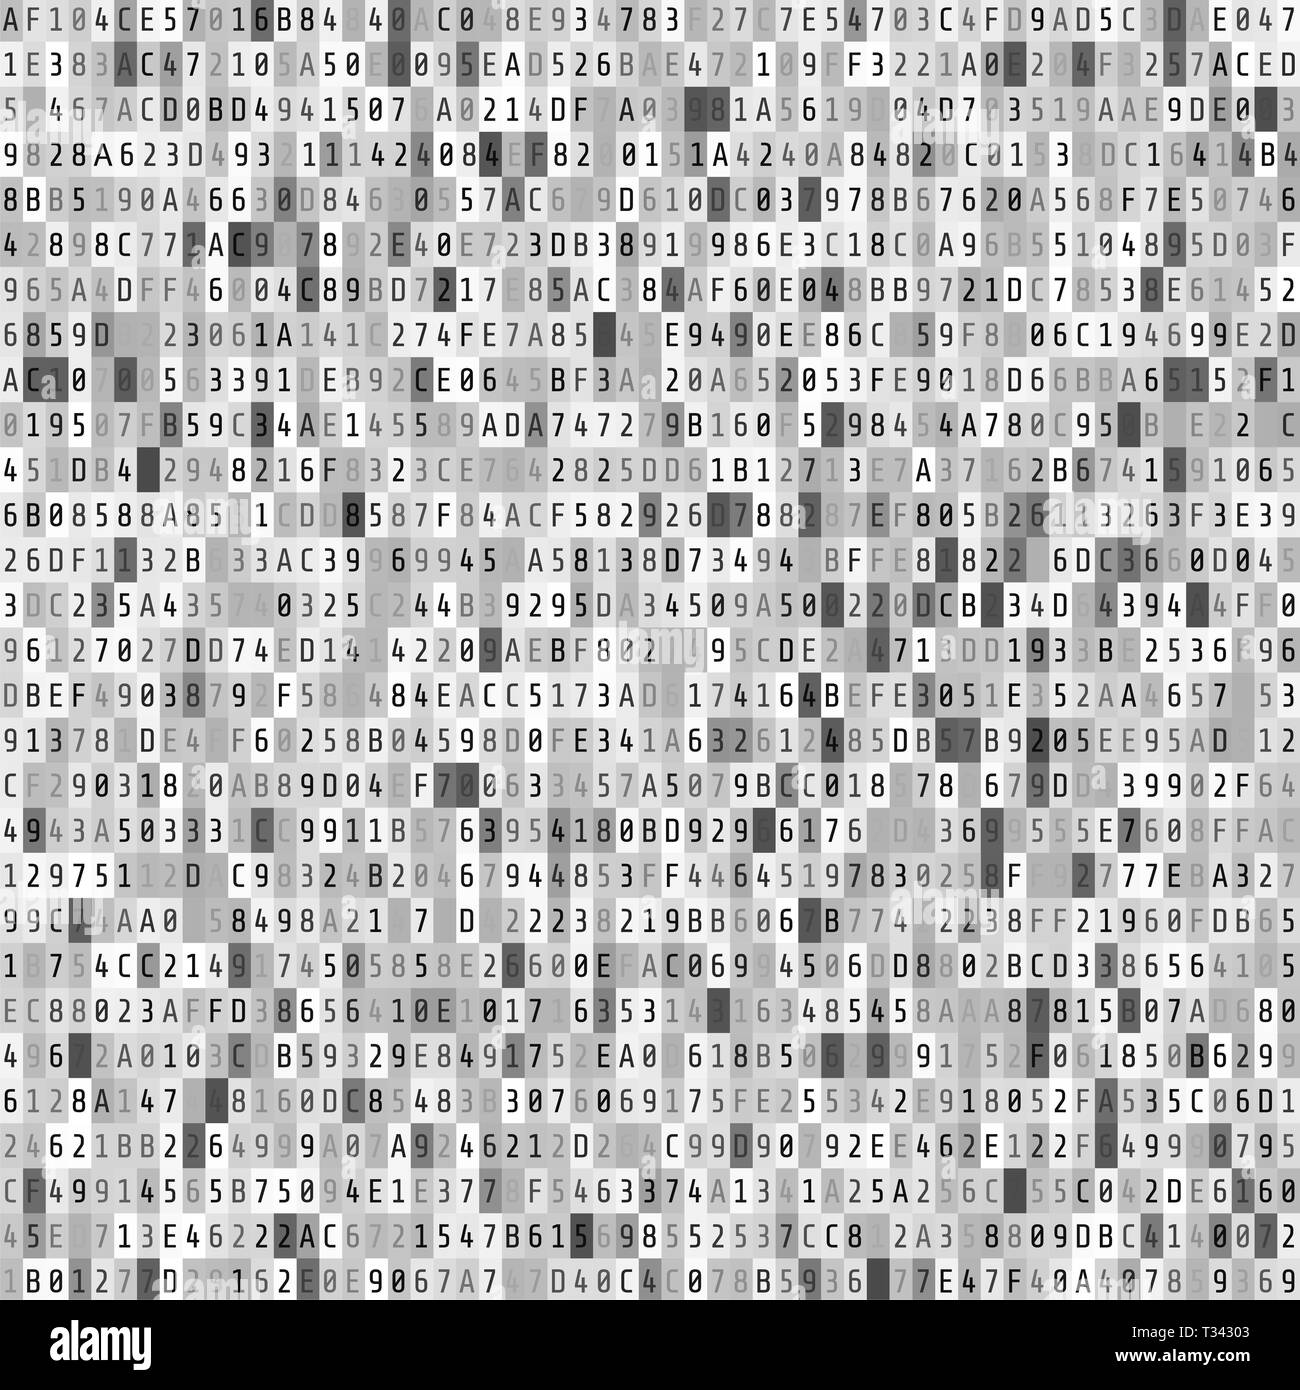 Hex code stream. Abstract digital data element. Matrix background. Vector illustration Stock Vector